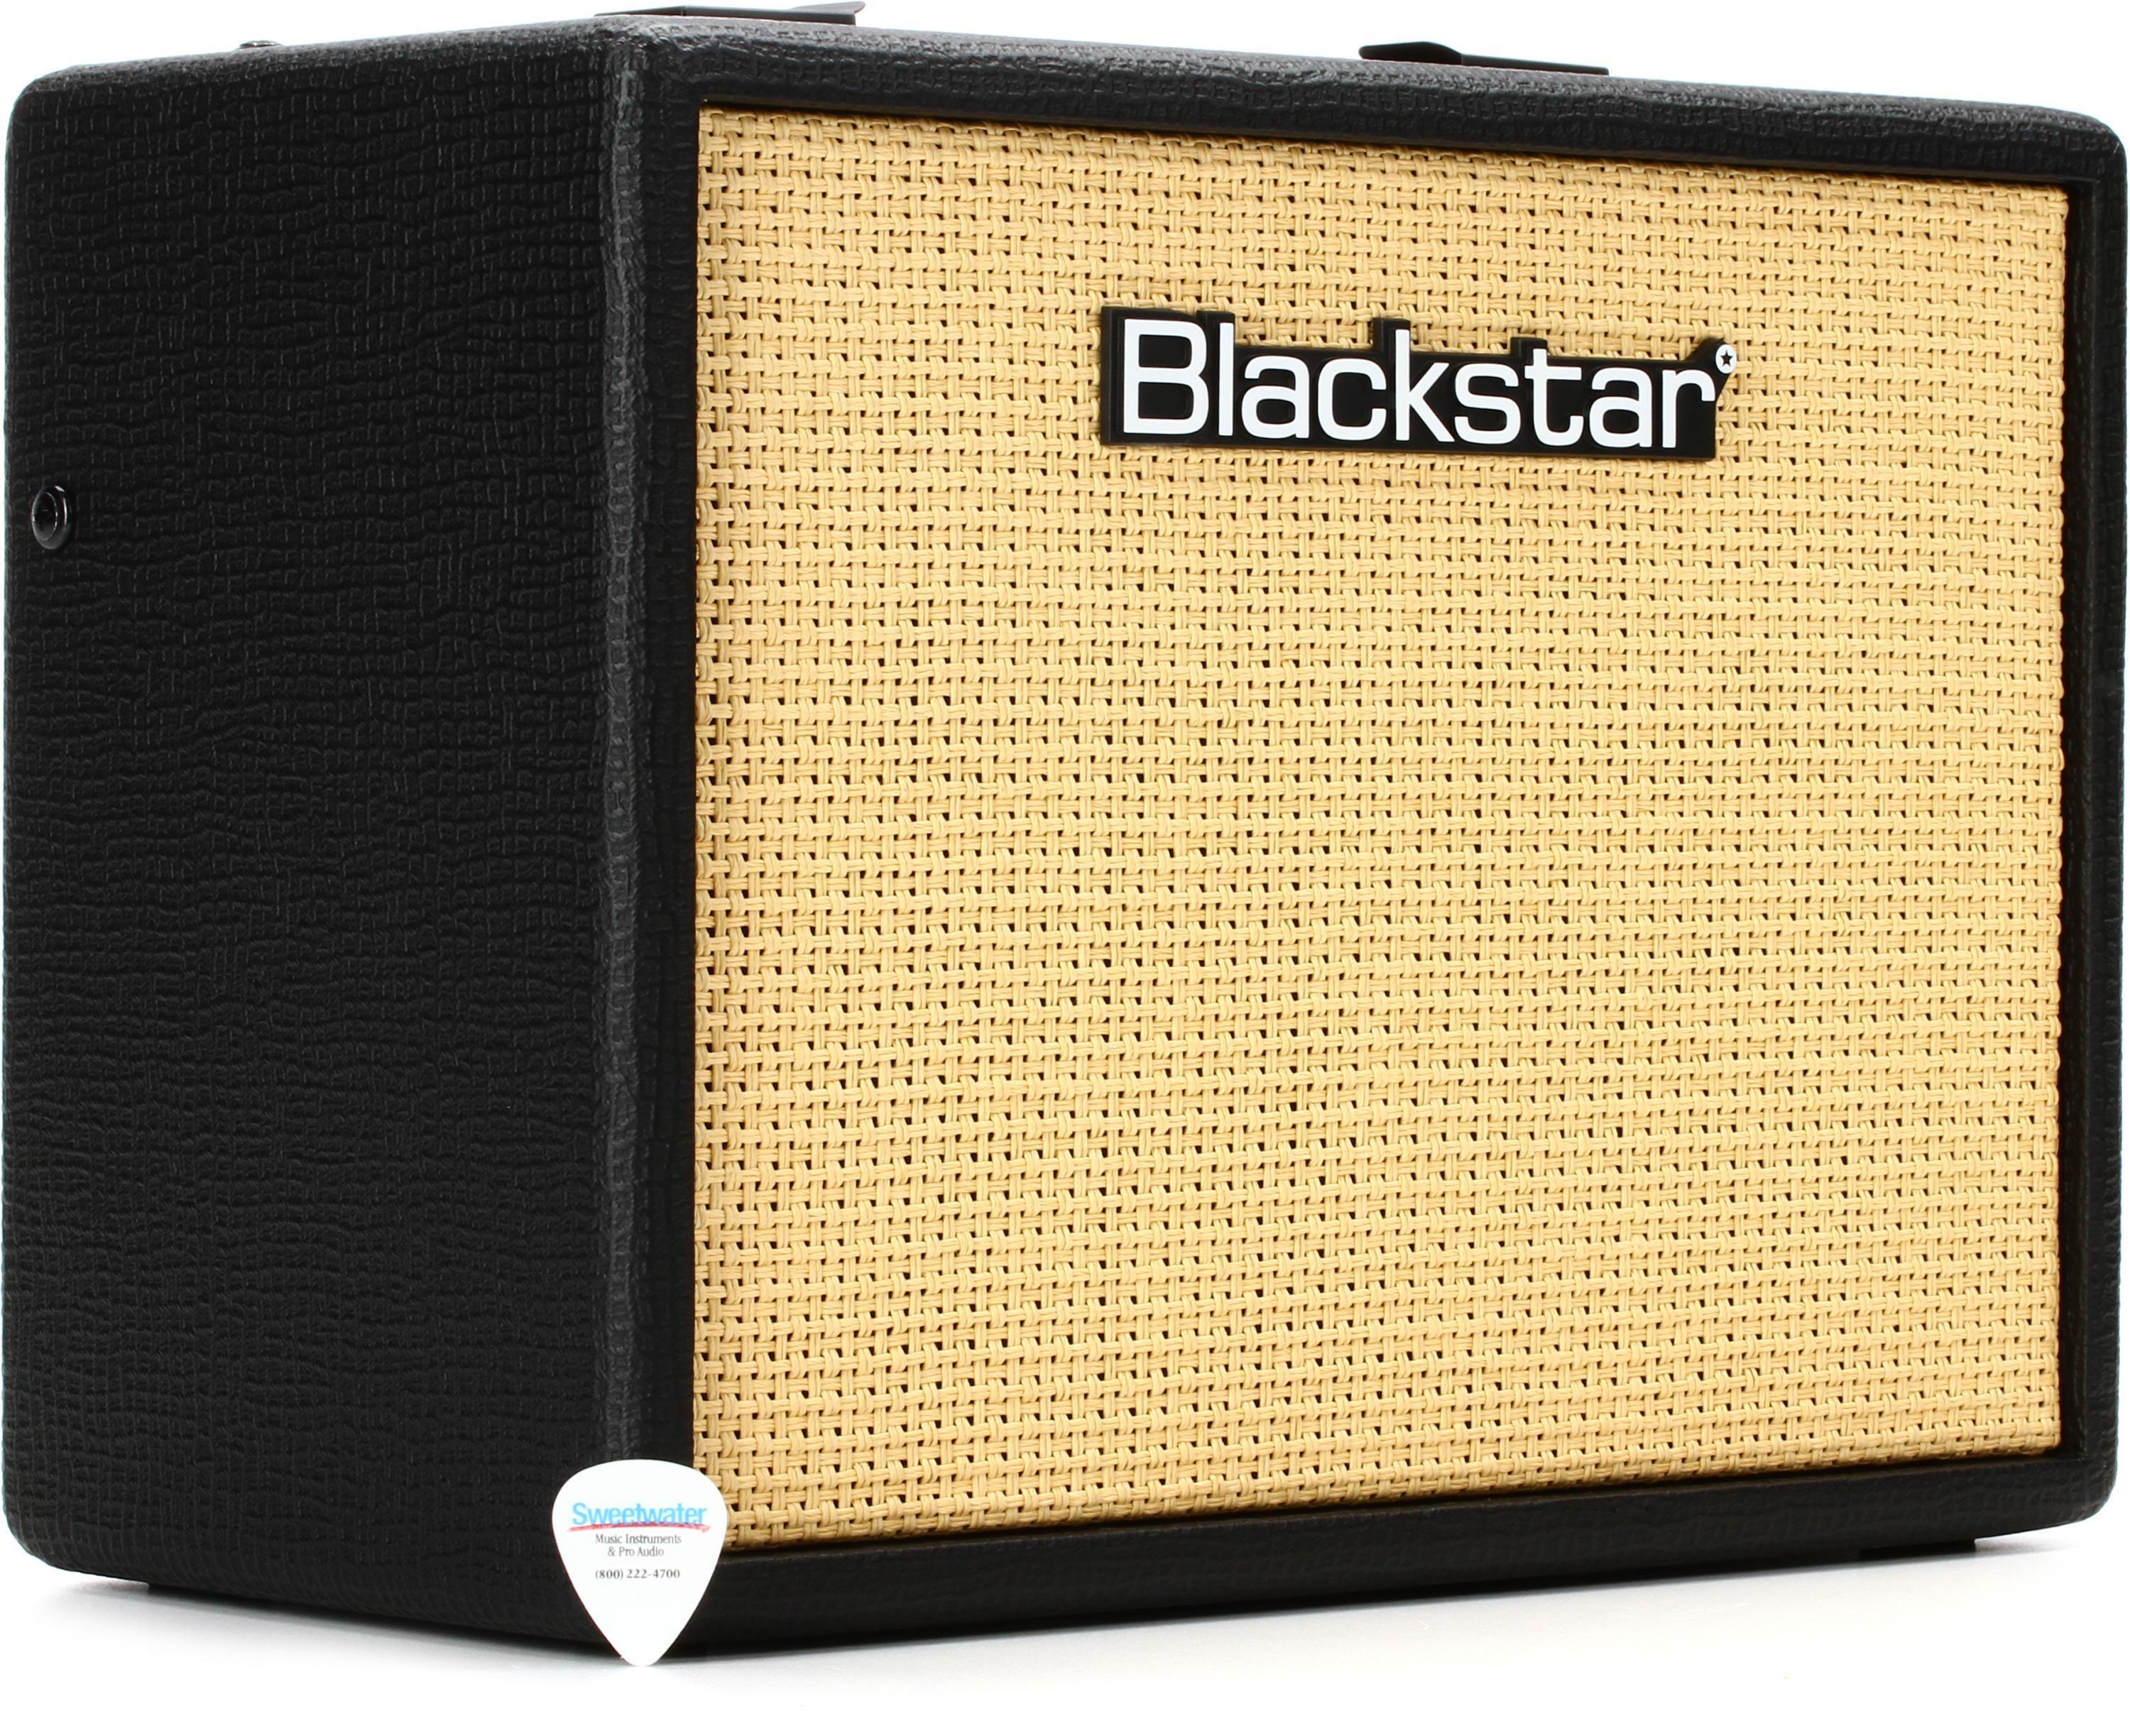 Blackstar Debut 15E 2x3 inch 15-watt Combo Amp - Black